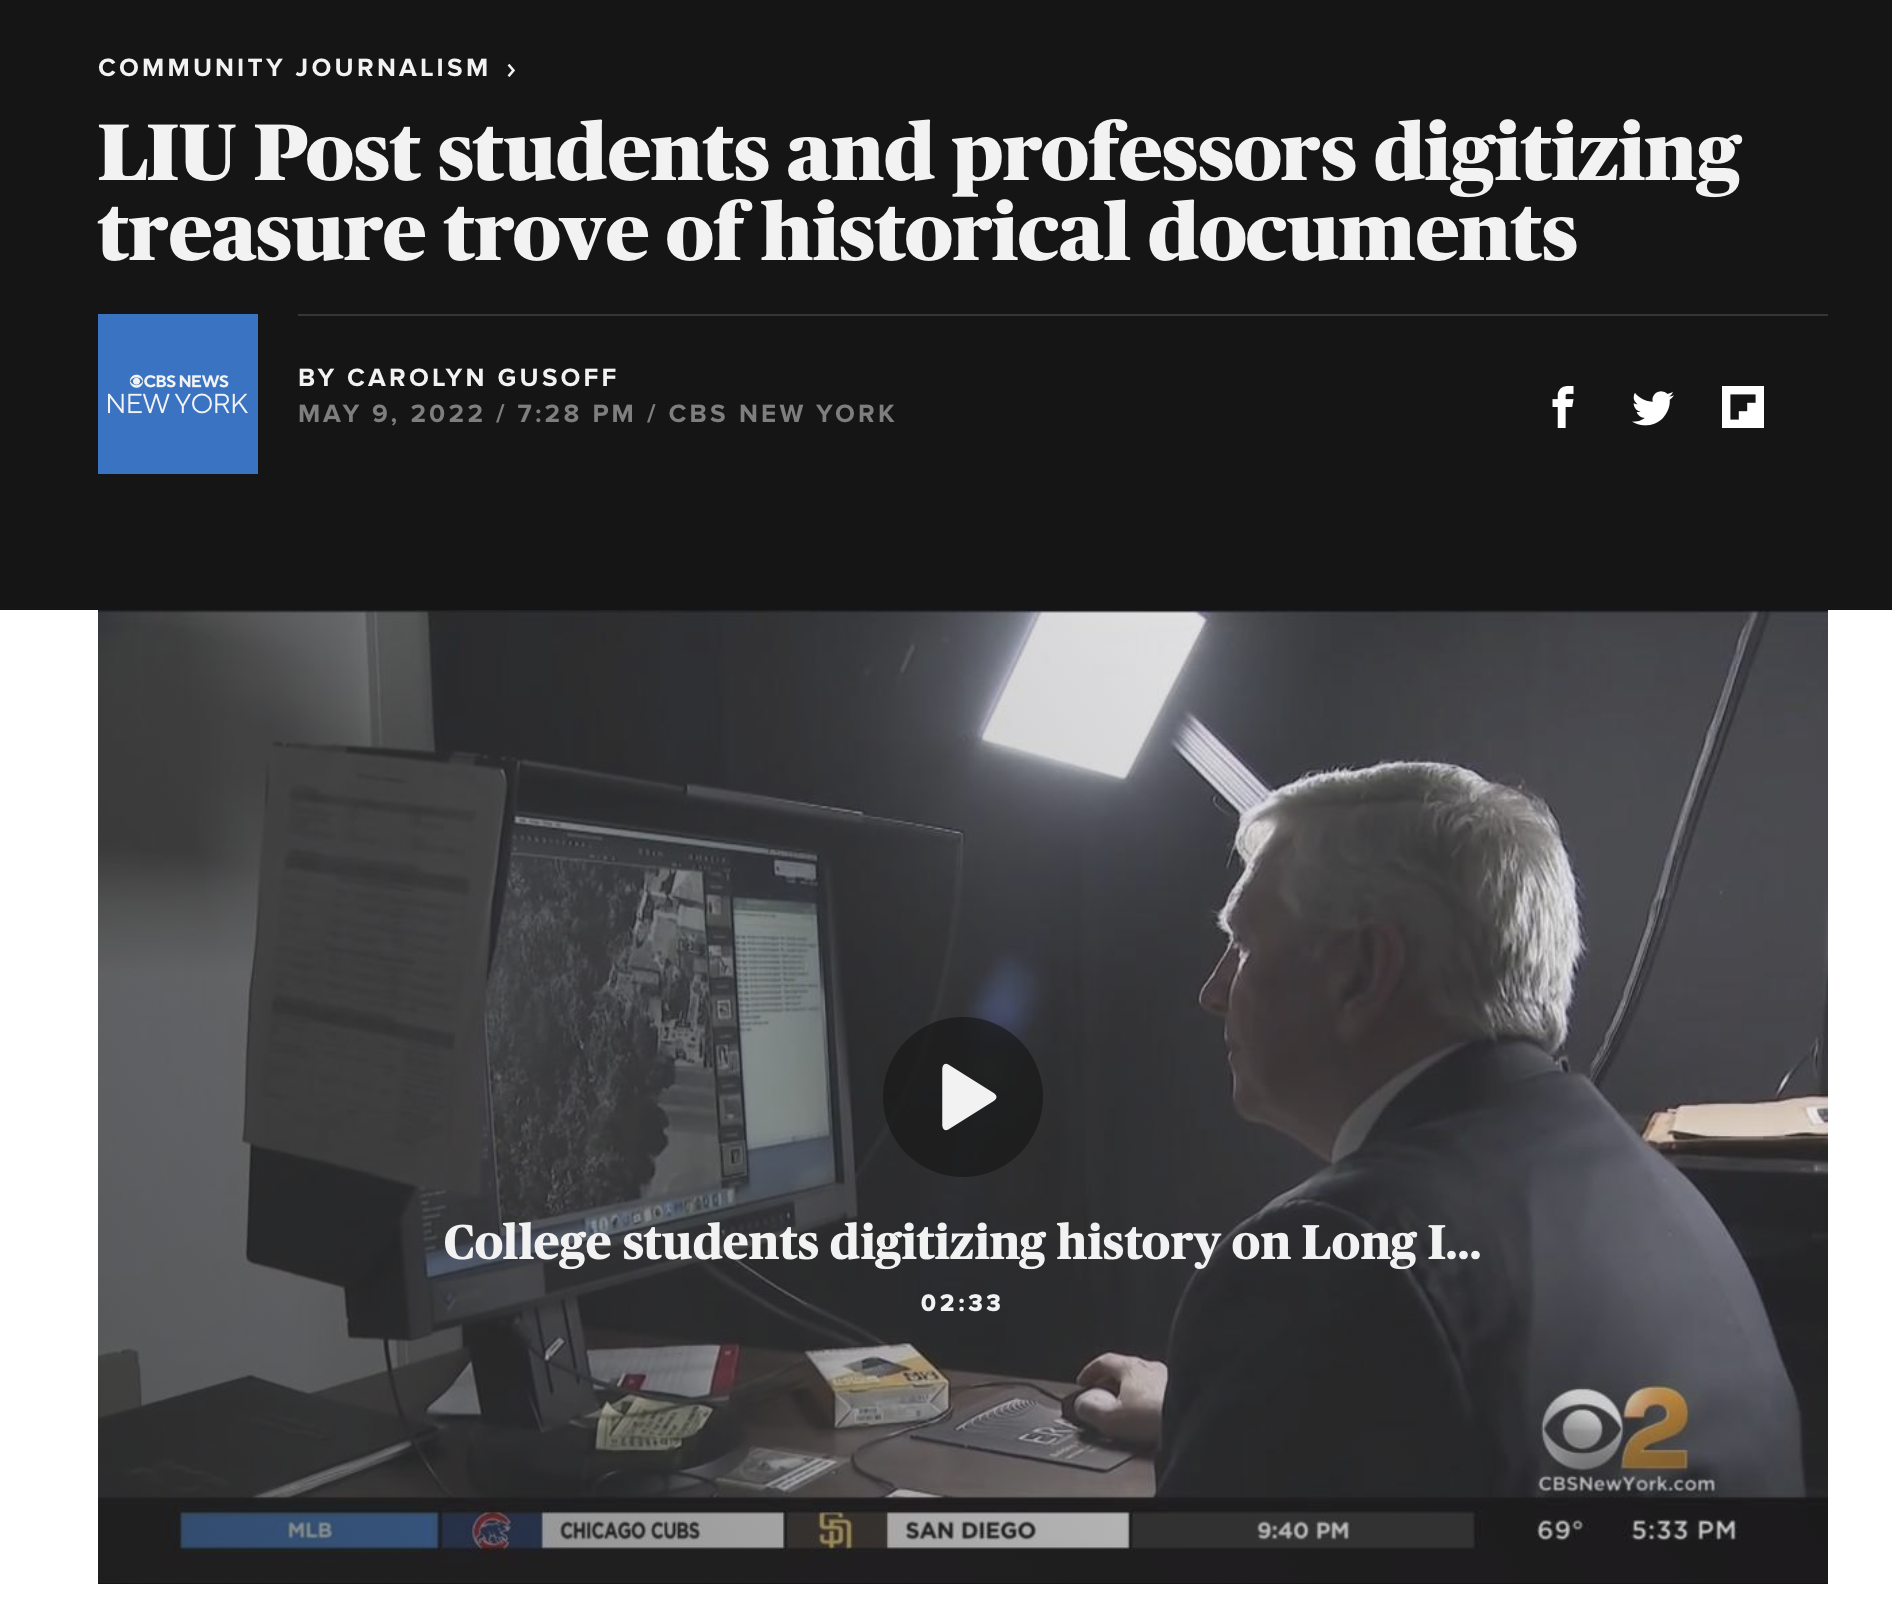 LIU Post students and professors digitizing treasure trove of historical documents.